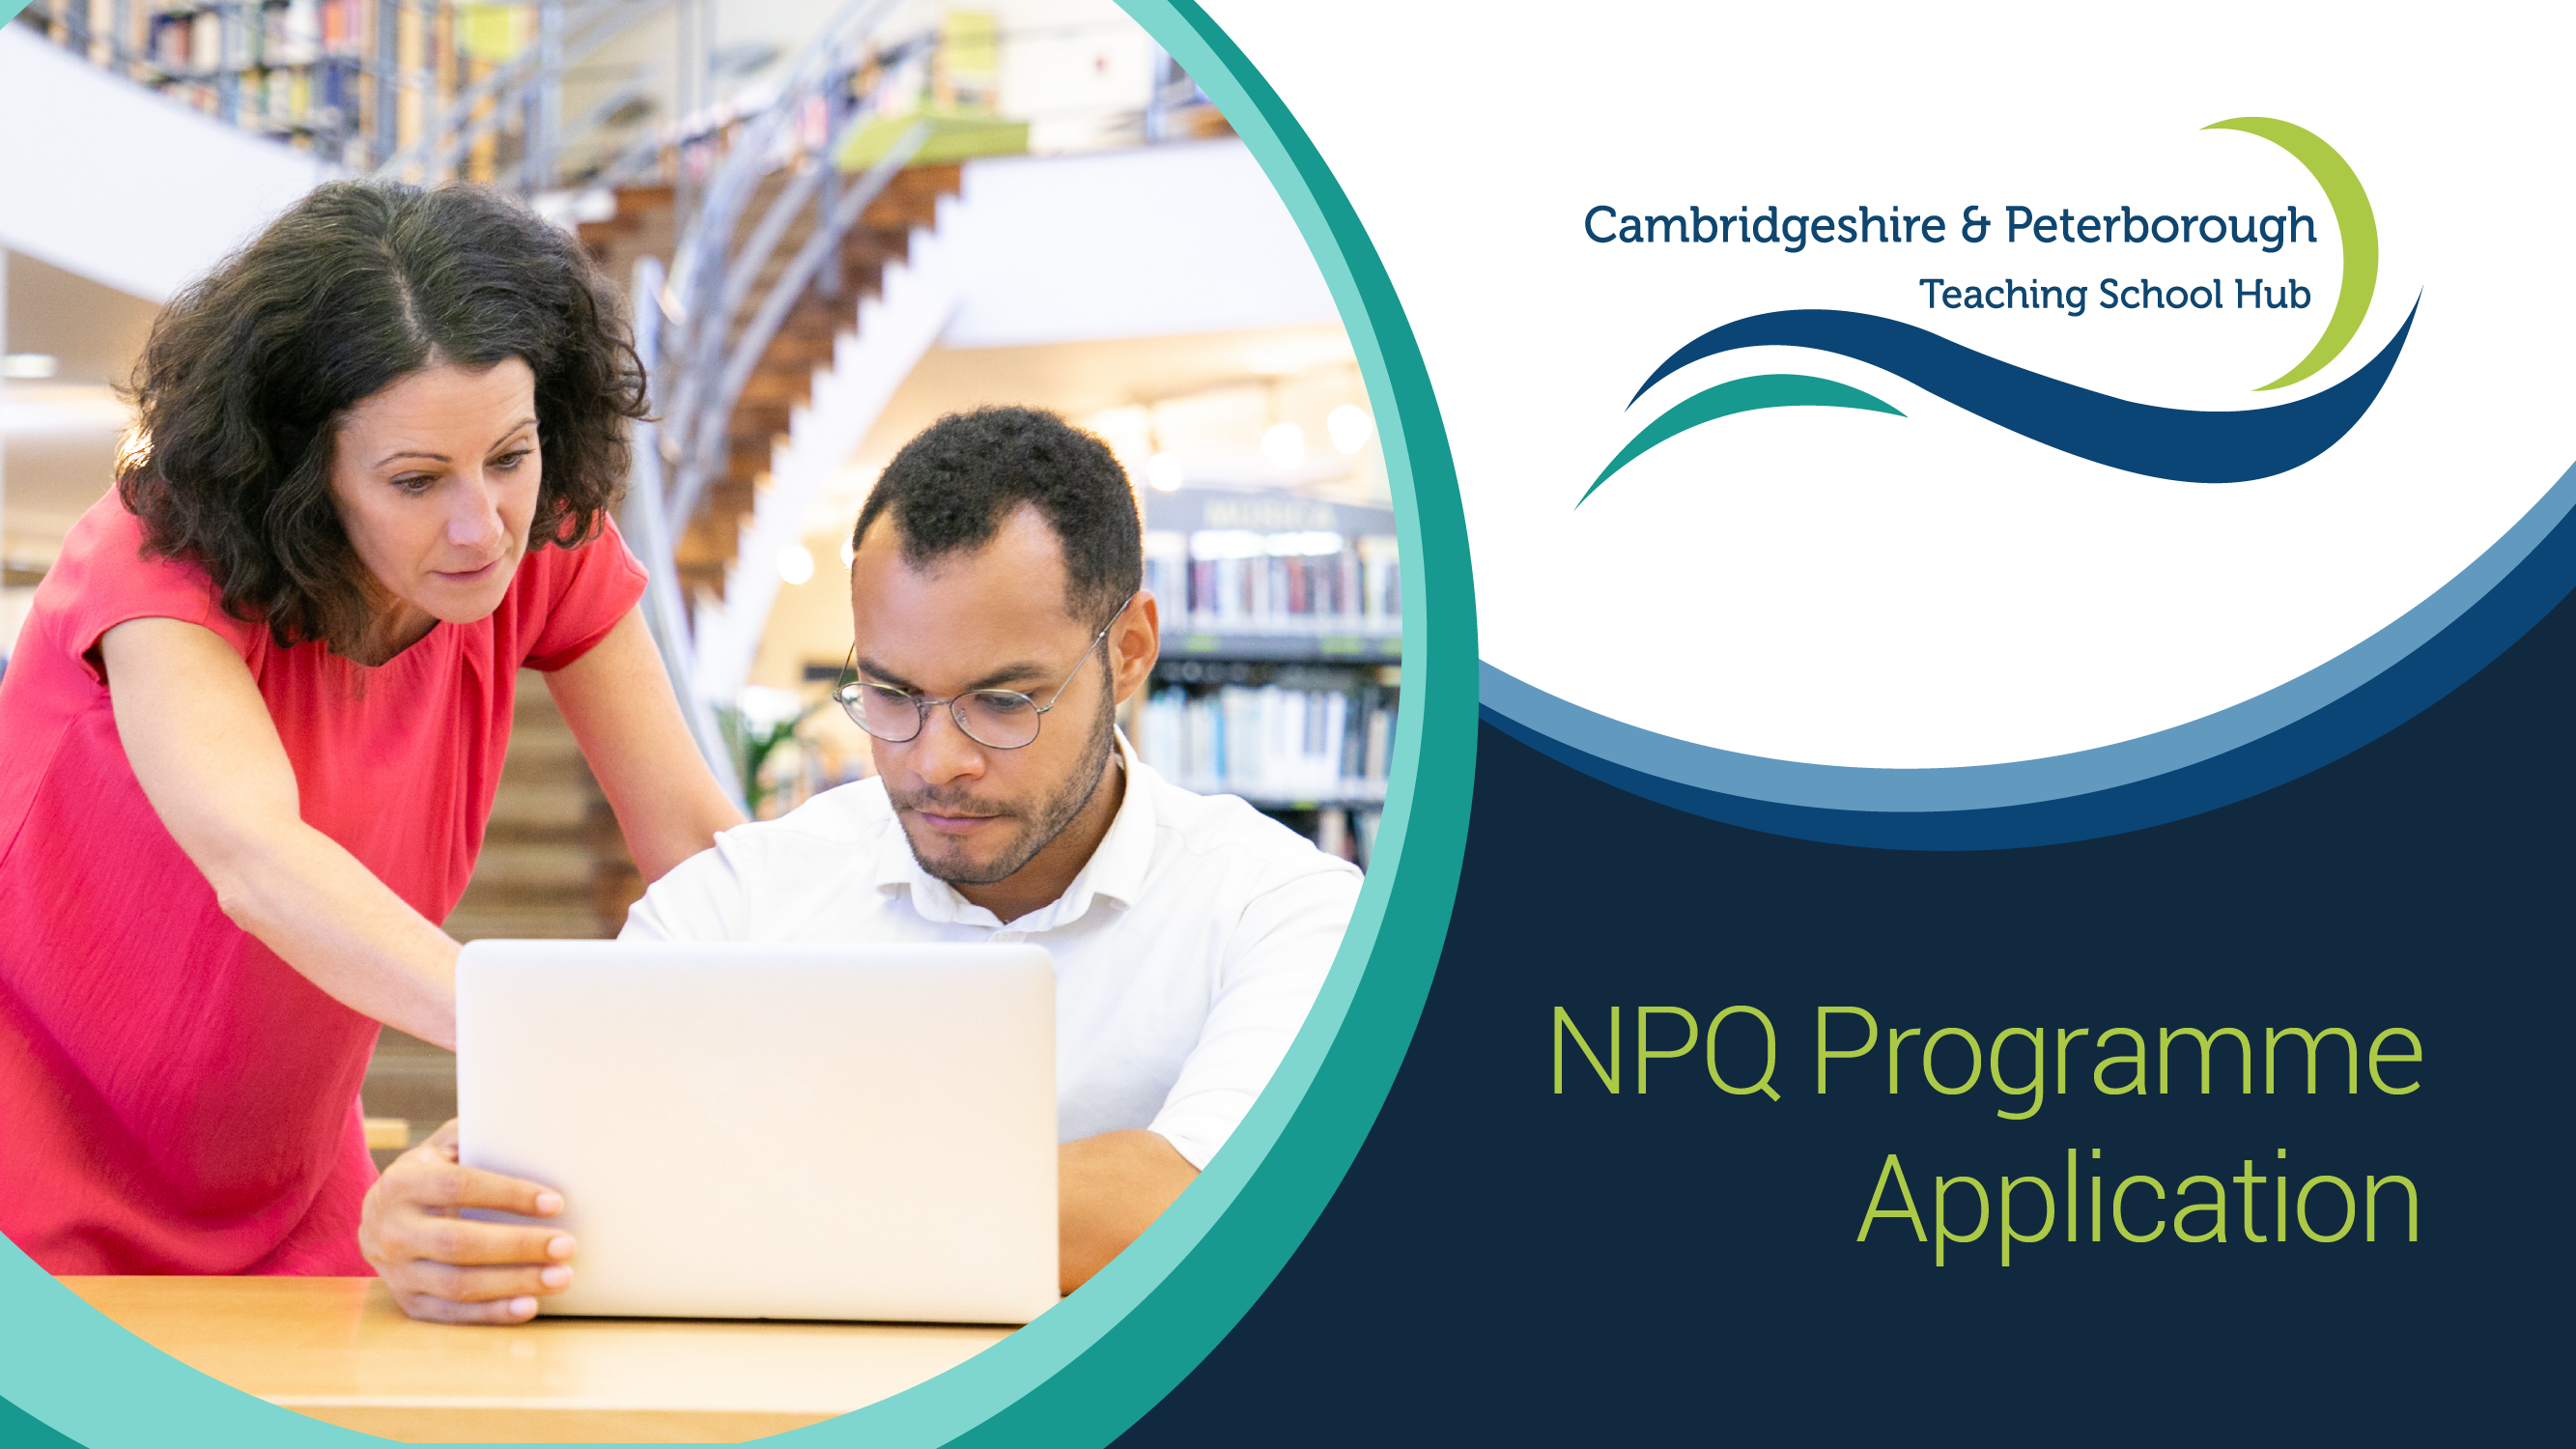 NPQ Programme Applications landing page